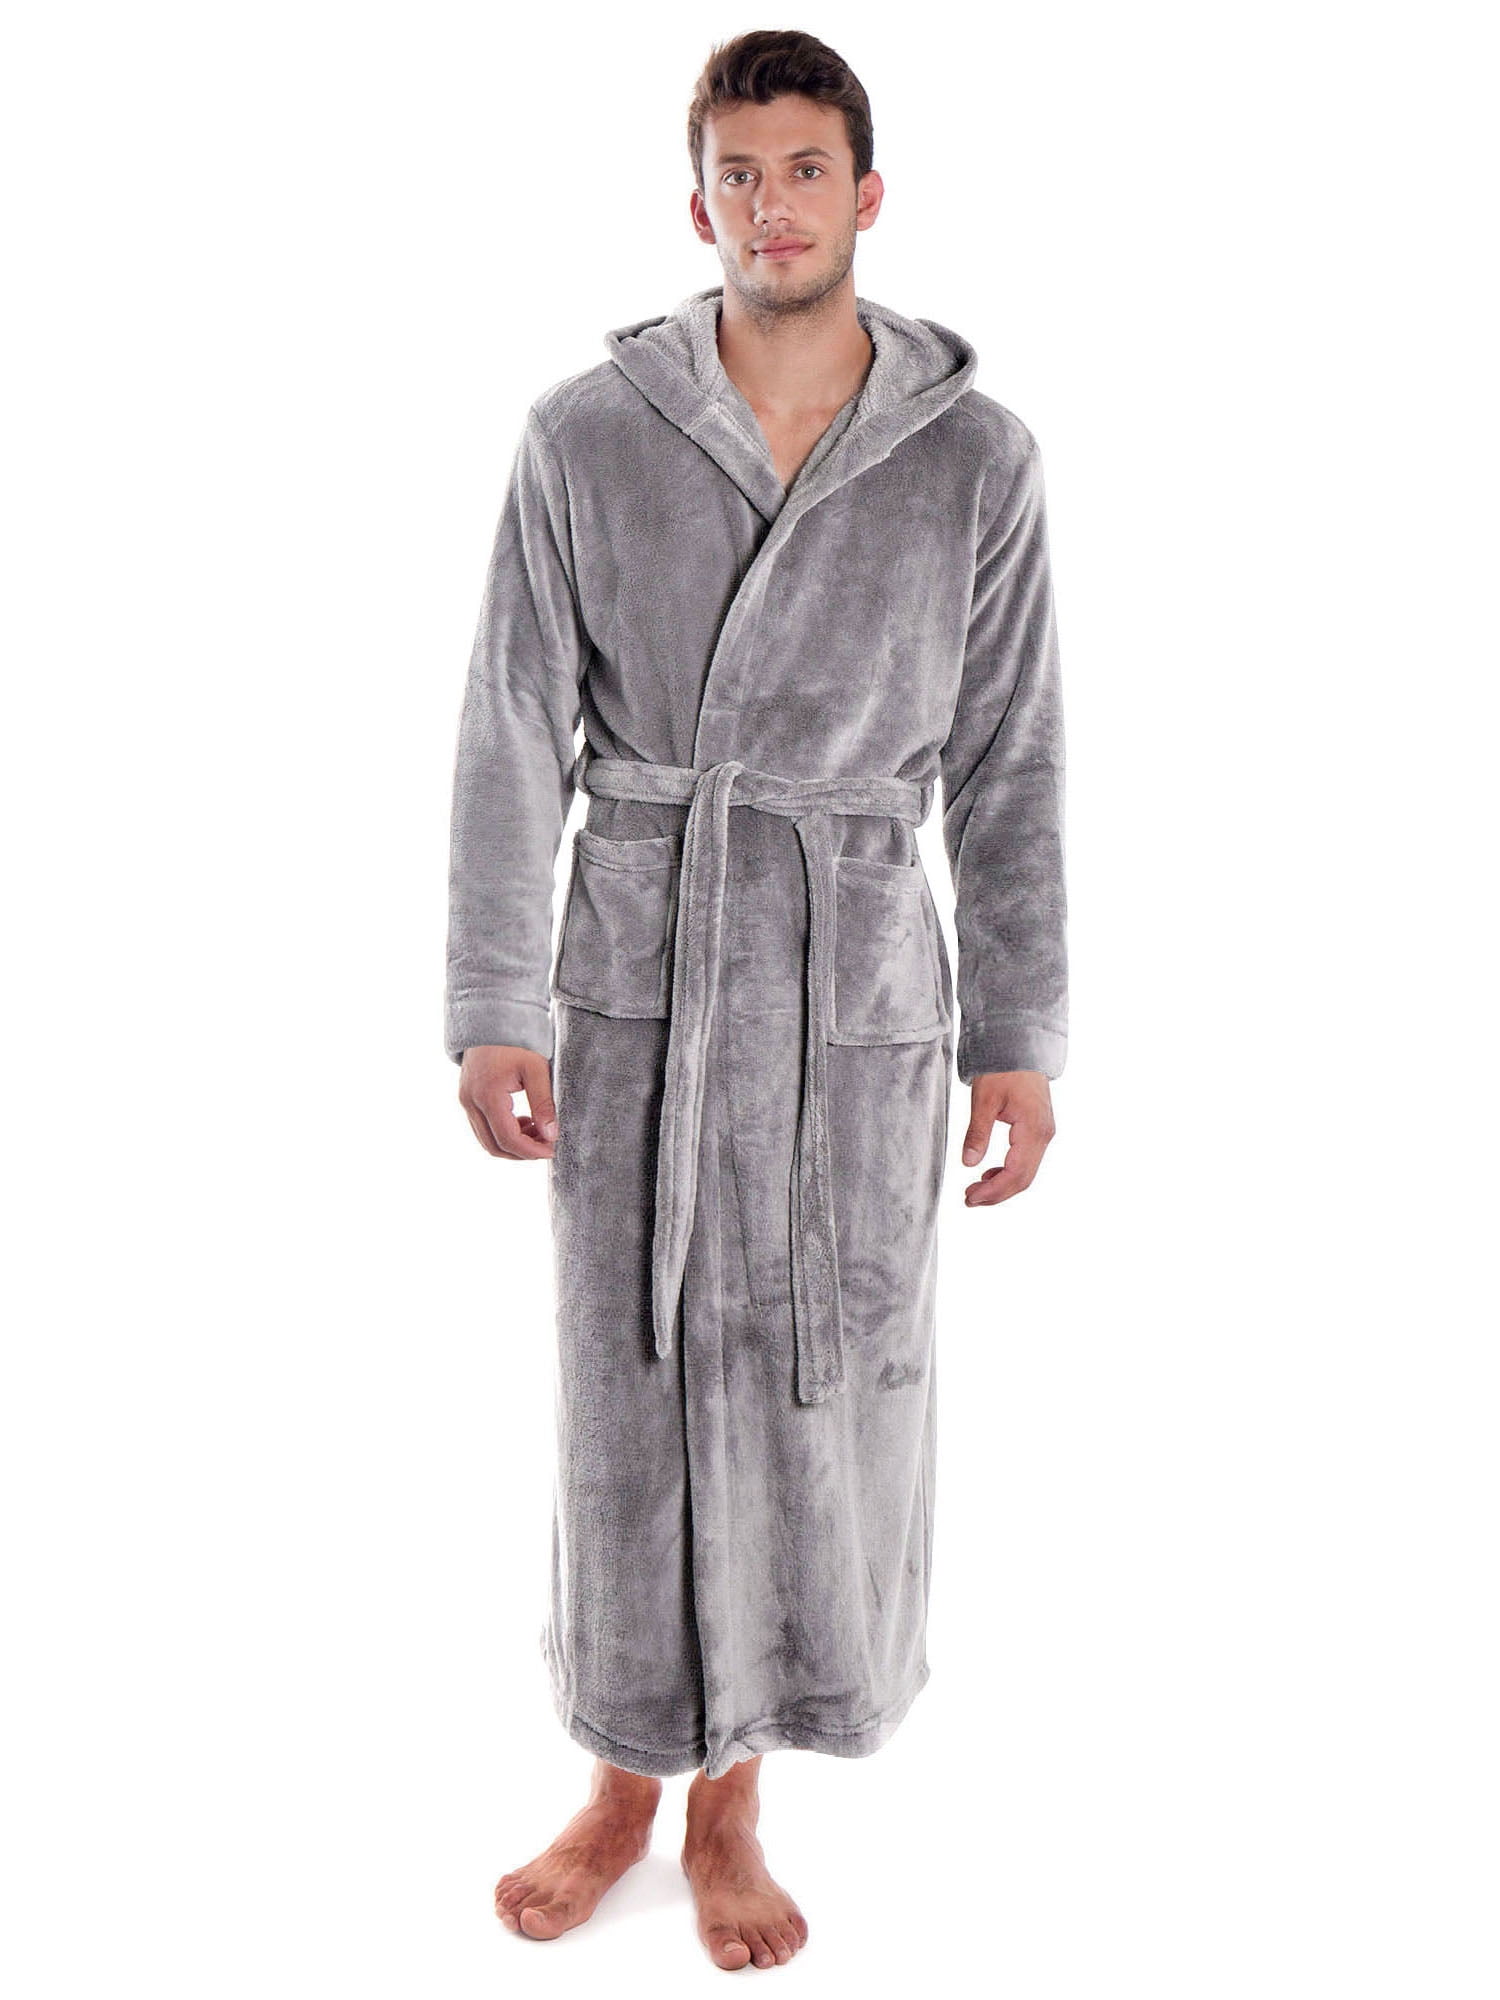 Fleece Robe Women's Plus Size Hooded Bath Robes,Grey,S-M Men/S-L Women ...